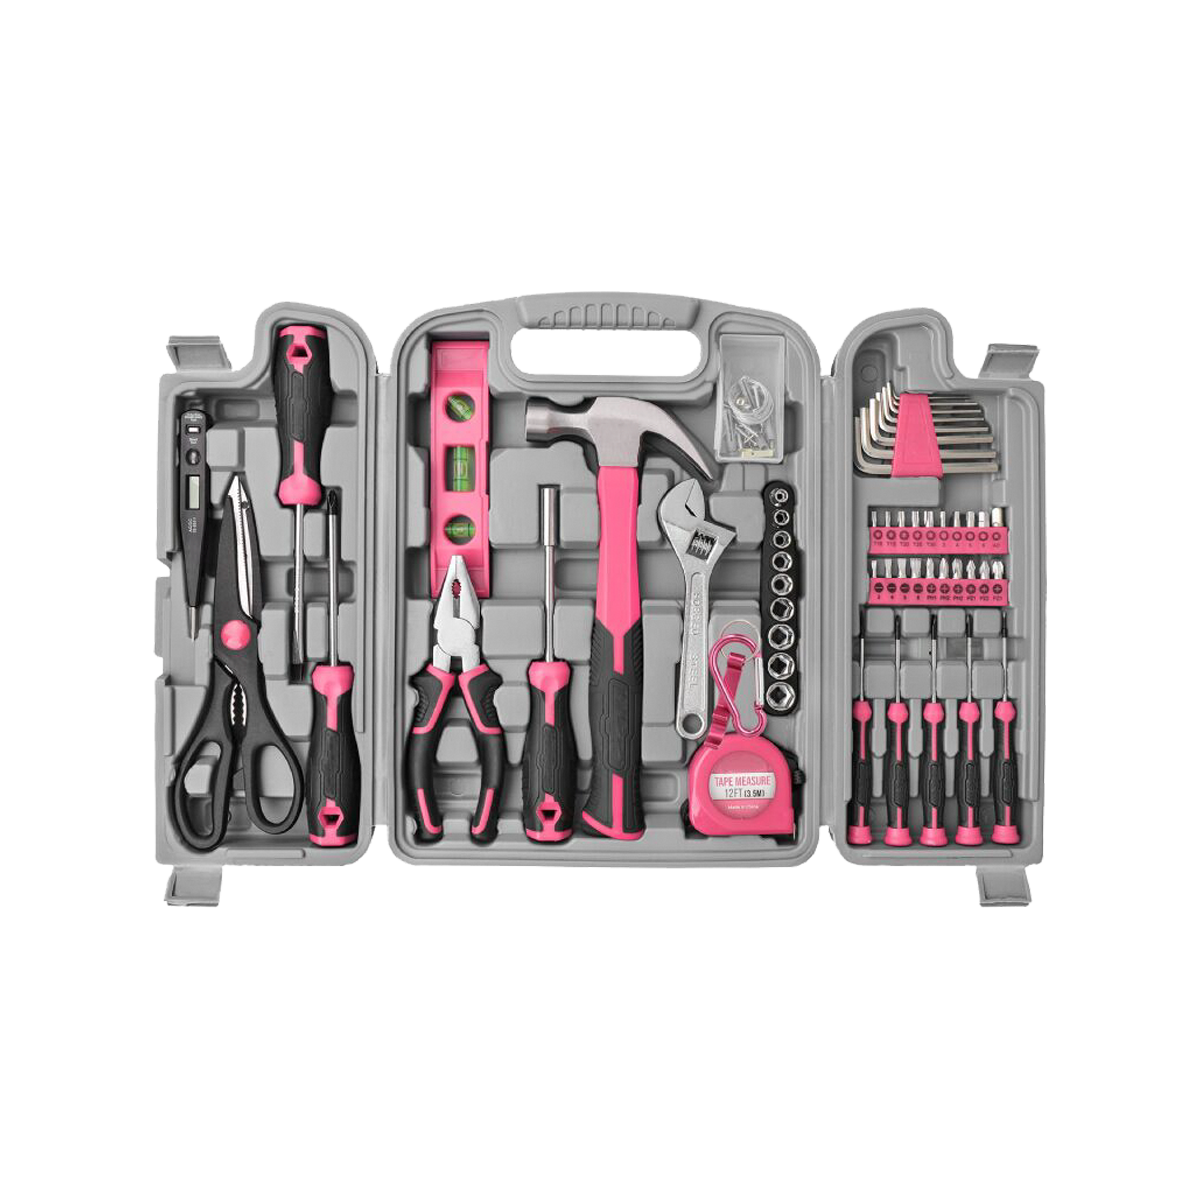 56pcs 핑크 홈 도구 키트 기본 손 도구 상자 수리 여성을위한 완벽한 도구 세트